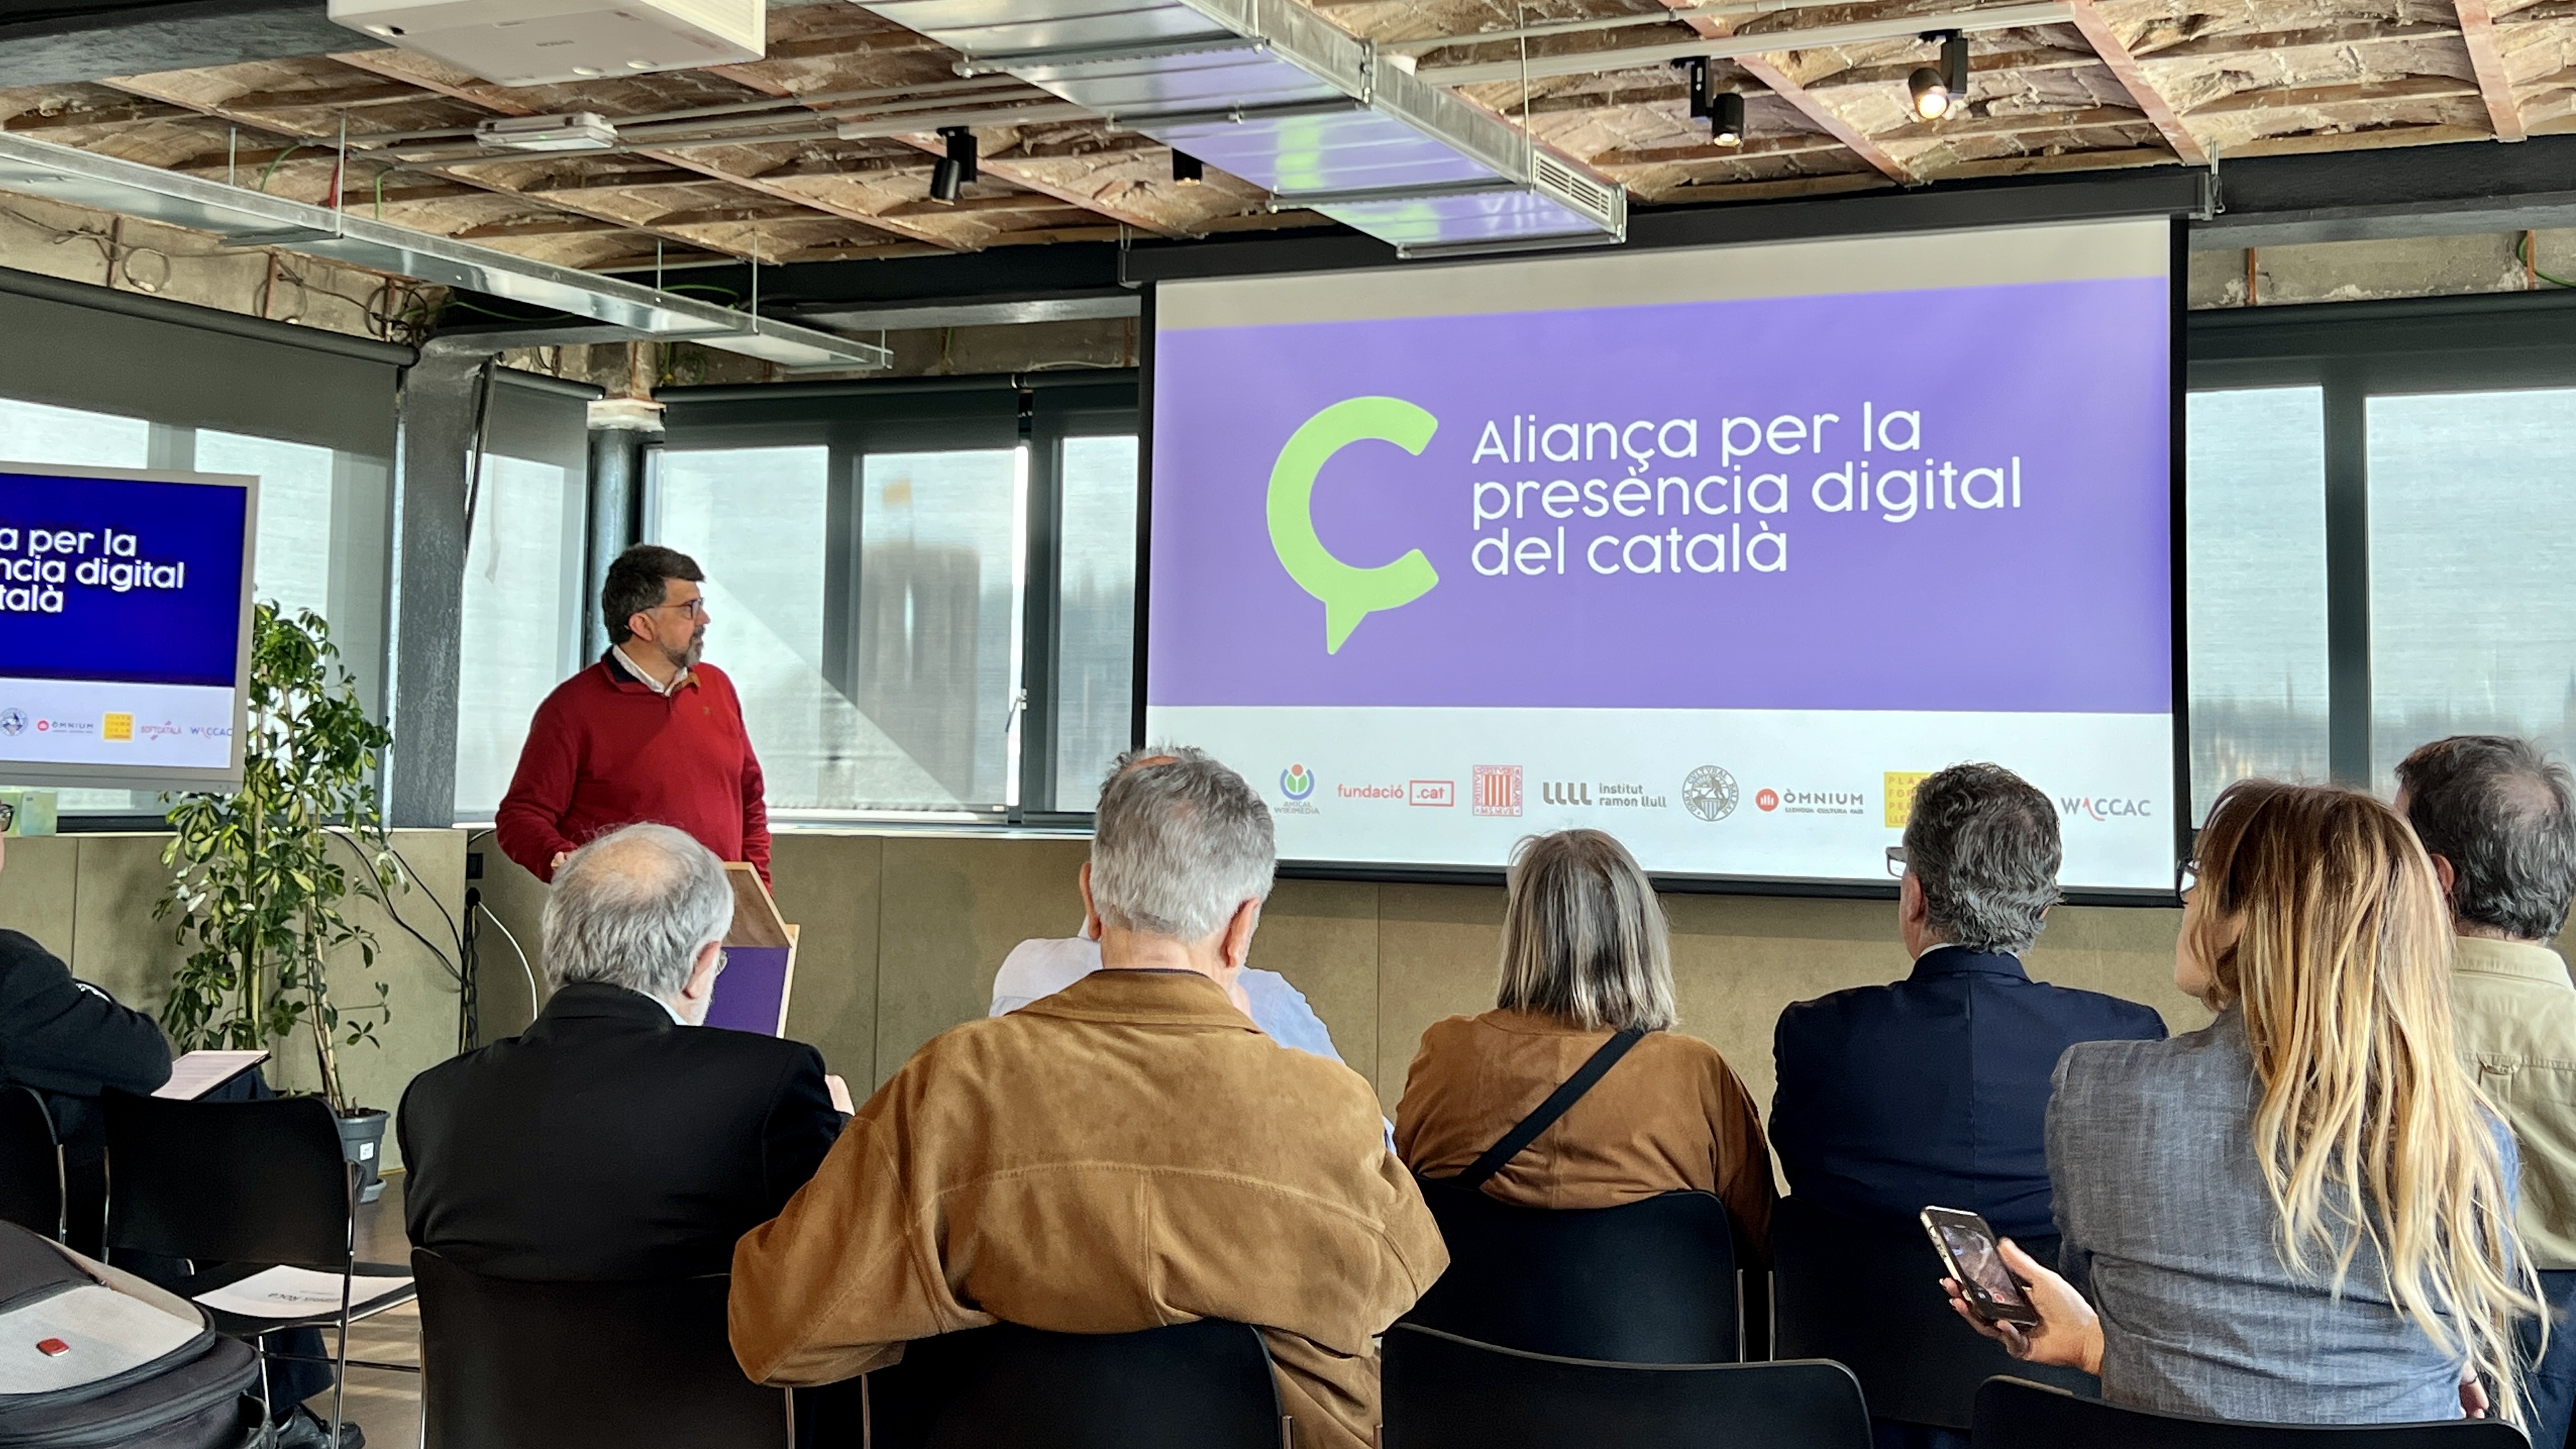 Genís Roca, president of Fundació.cat foundation, during the presentation of the 'Aliança per la presència digital del català' alliance in Barcelona on March 21, 2023